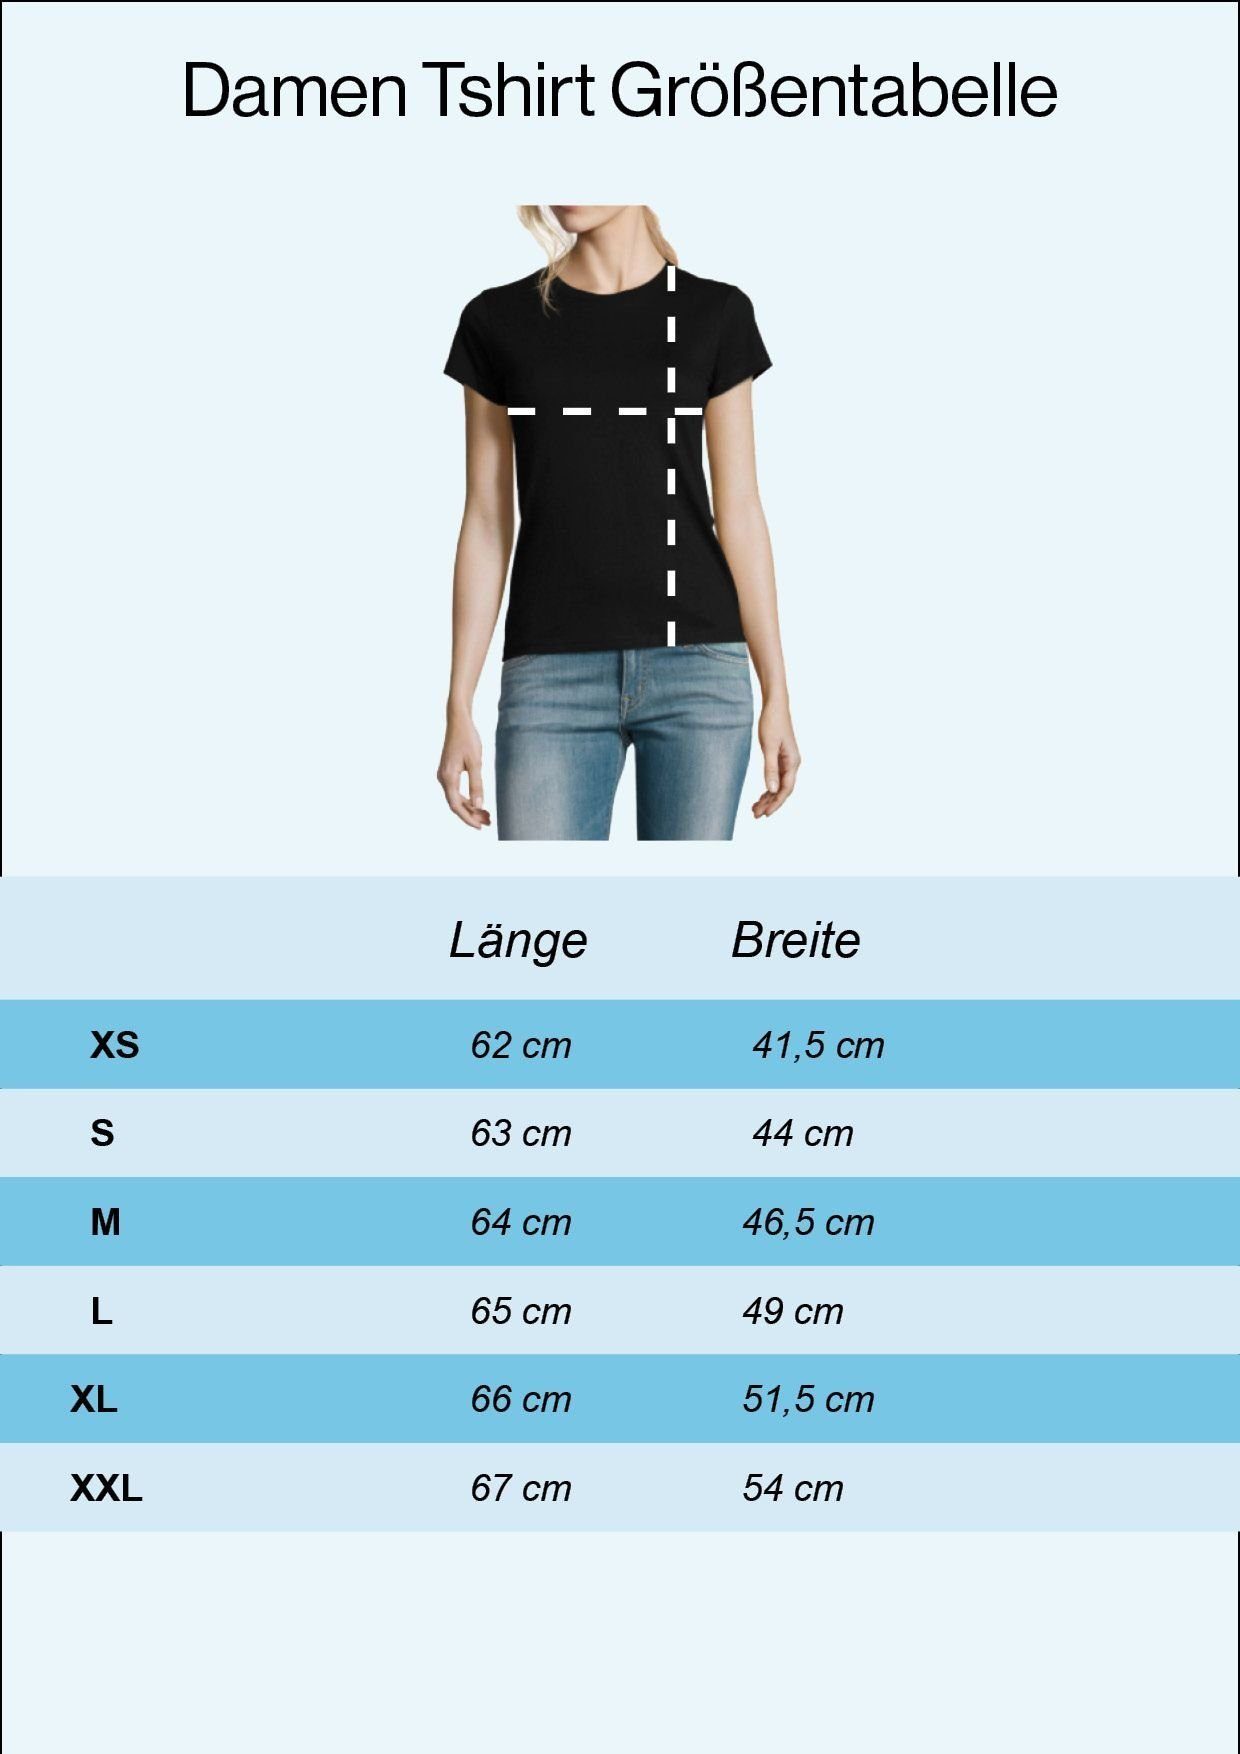 Youth Designz Damen mit Zauberwürfel Frontprint Royalblau Shirt T-Shirt witzigem